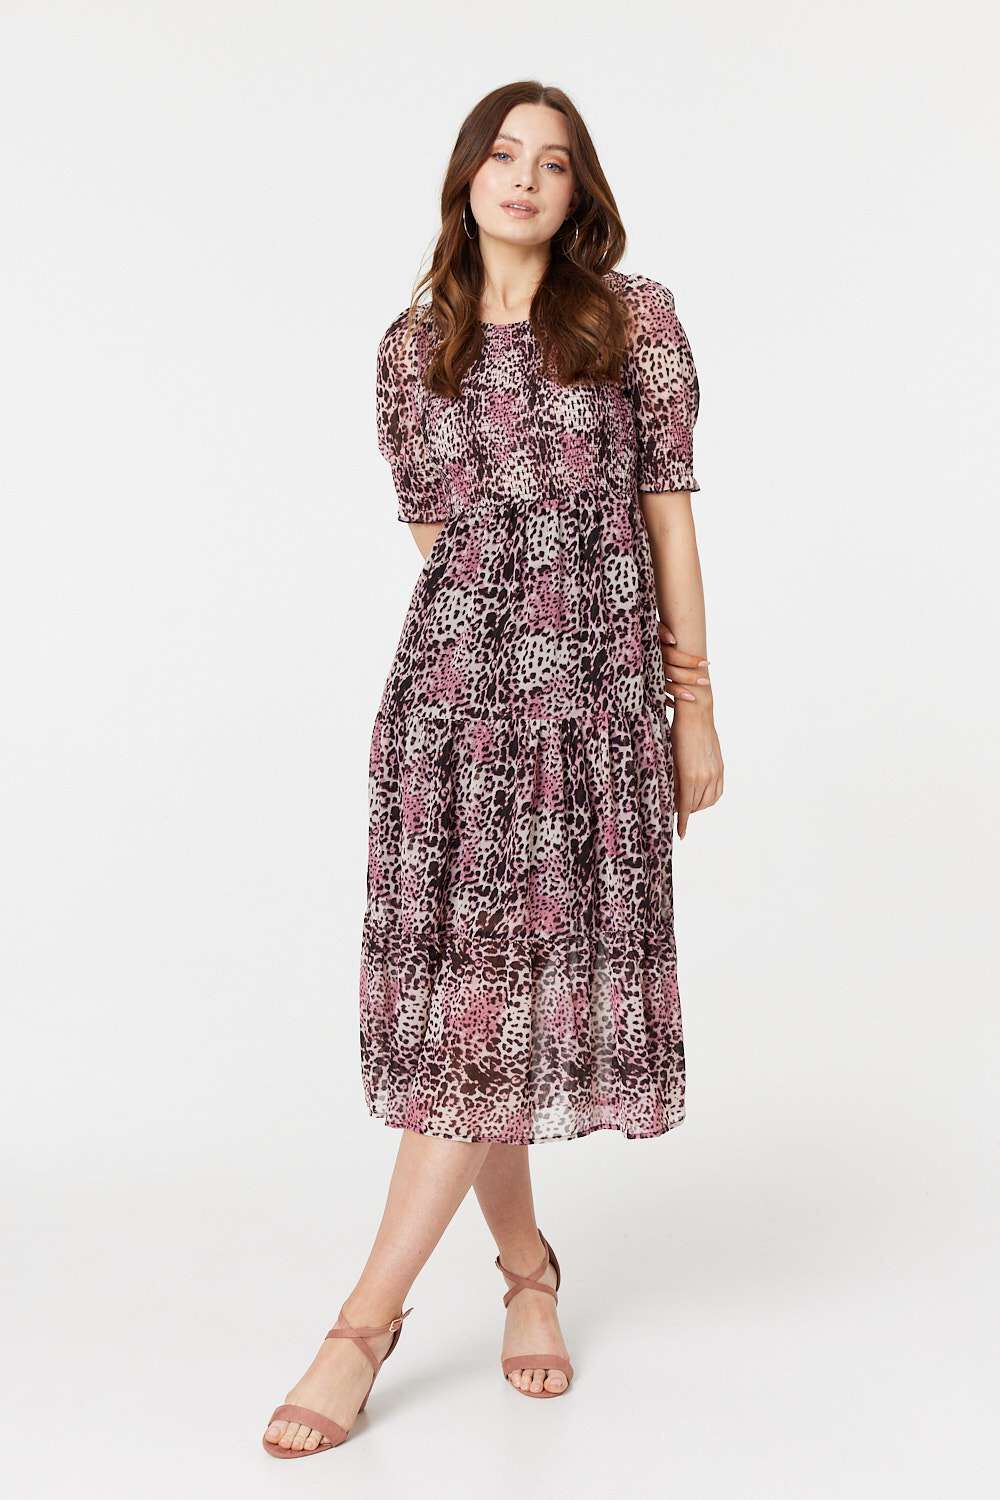 Izabel London Pink - Animal Print Midi Smock Dress, Size: 18